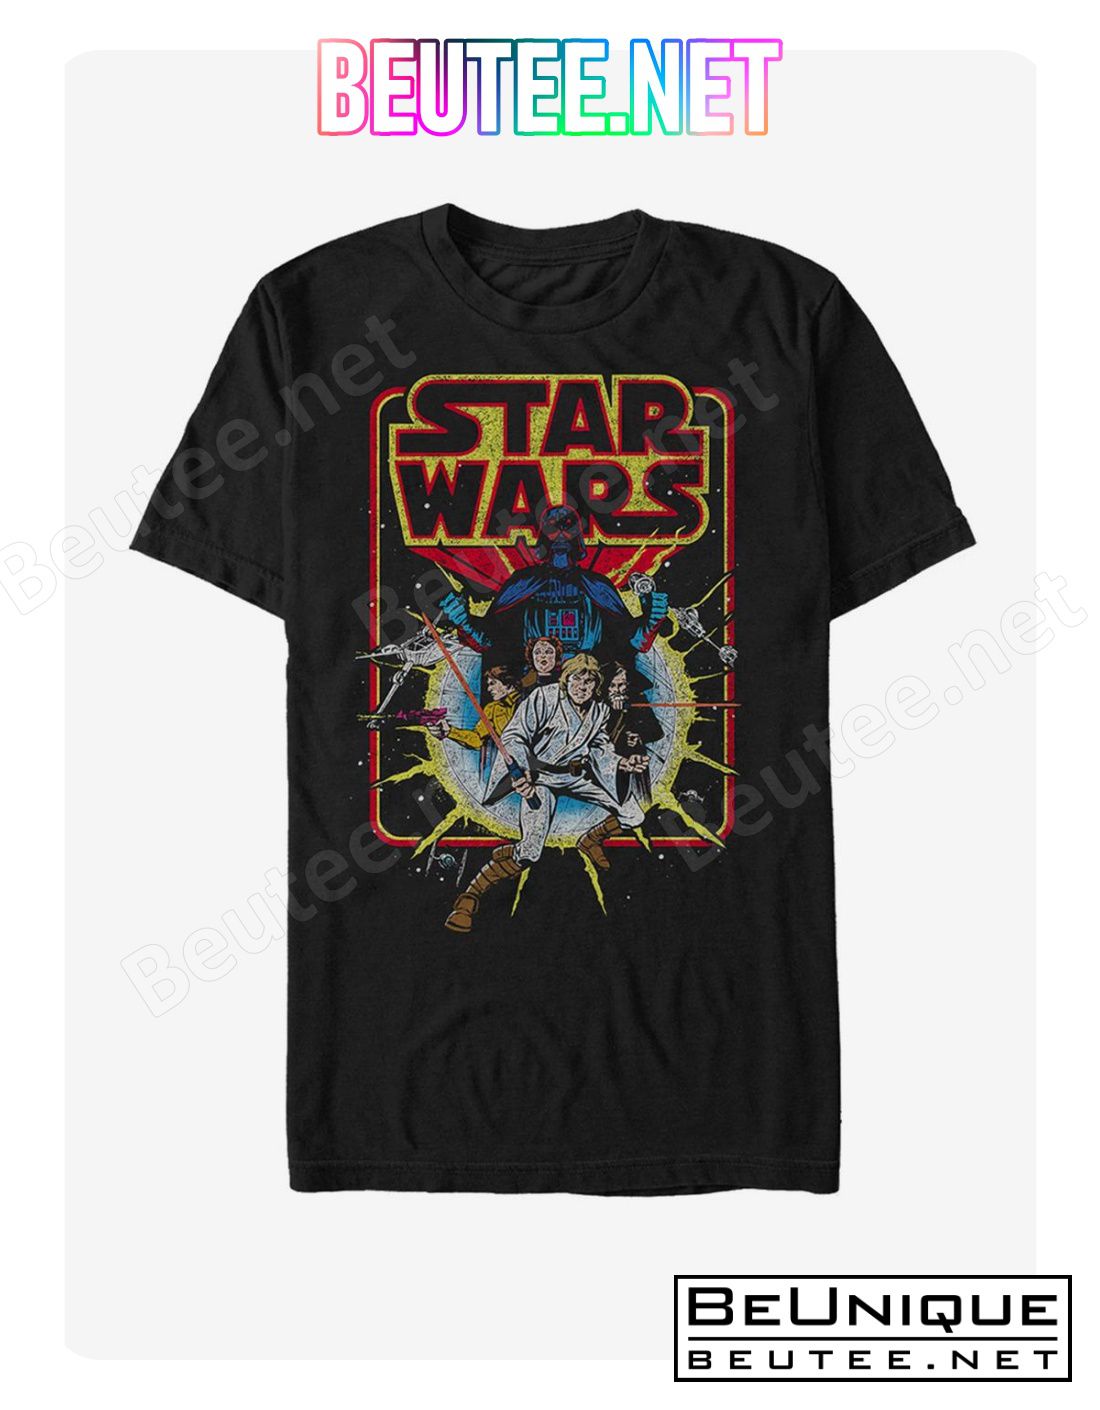 Star Wars Retro Explosion T-Shirt